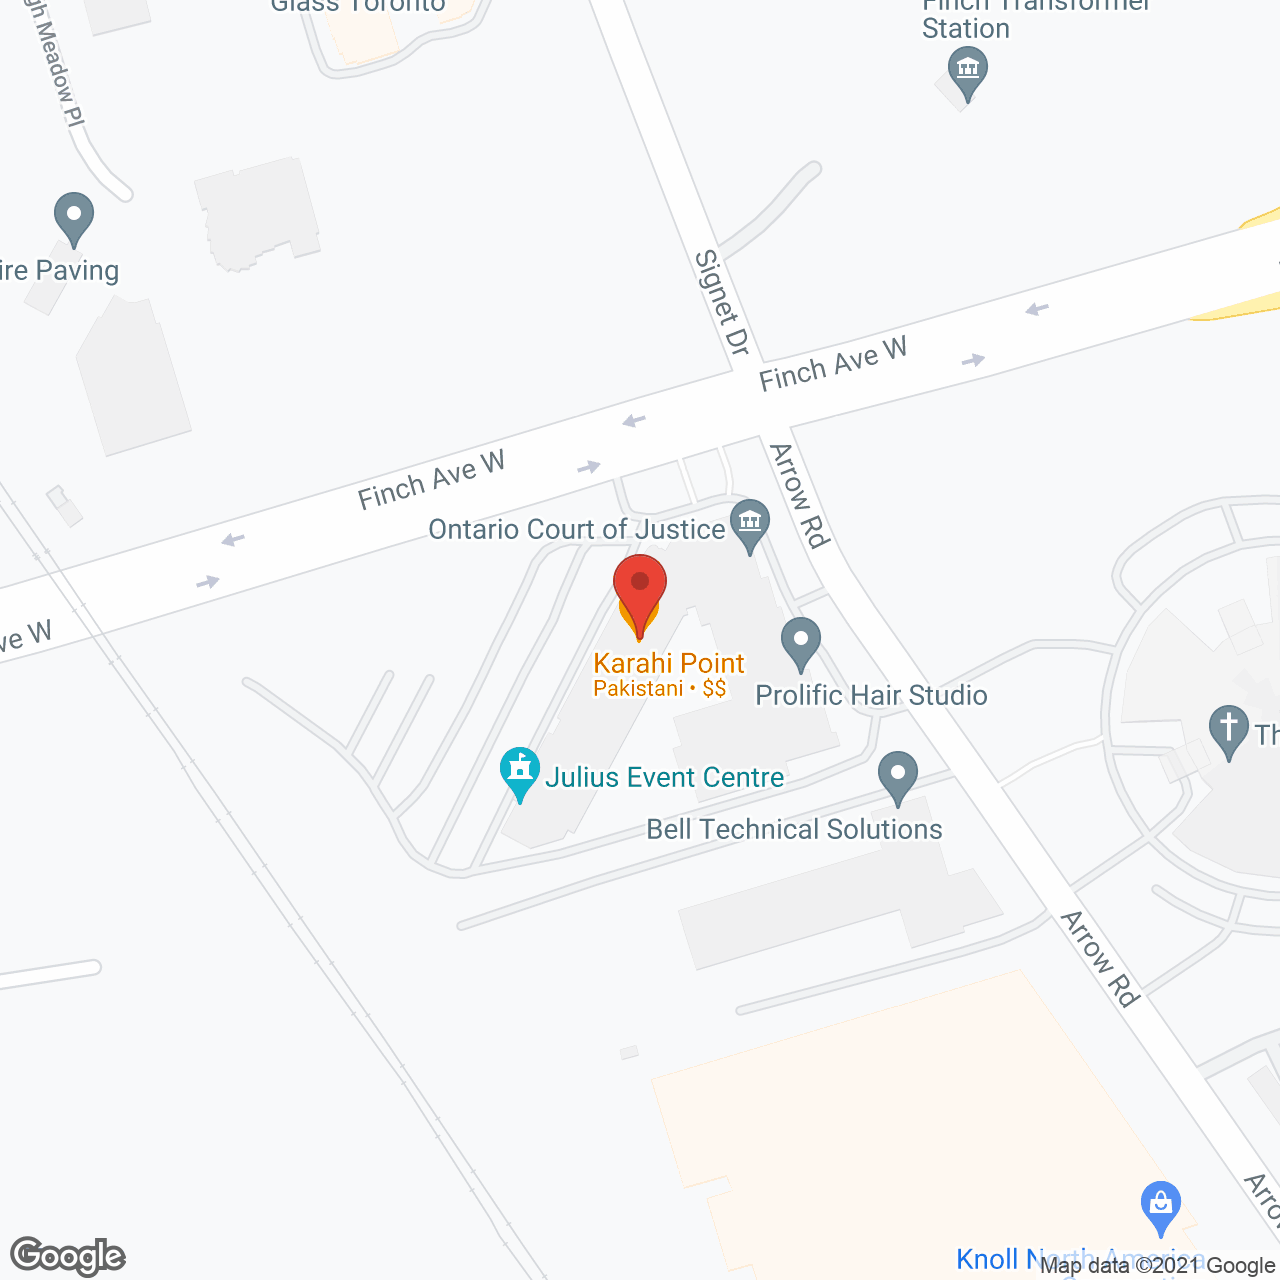 Villa Columbo in google map